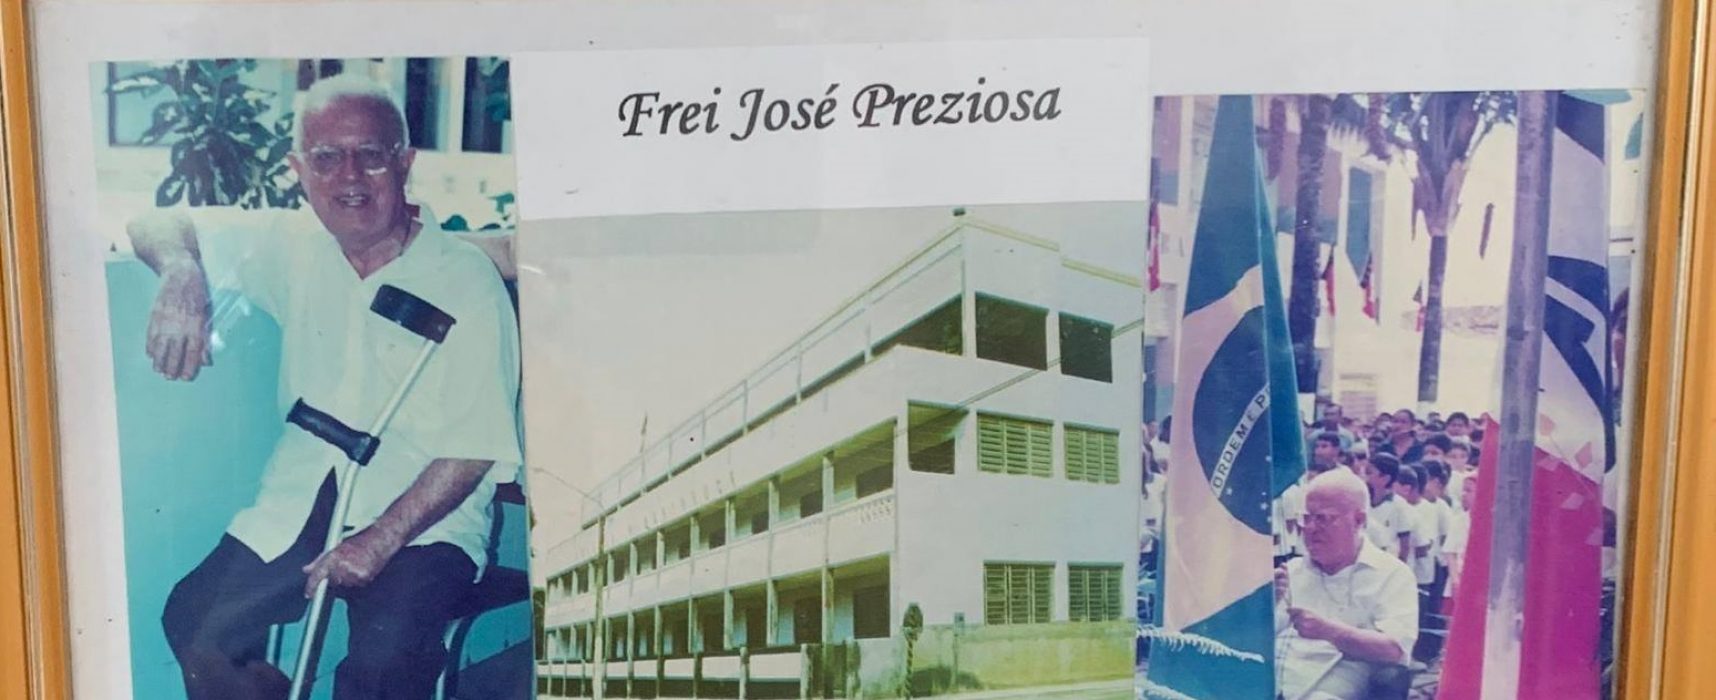 Associazione oratoriani ricorda Frèi José Preziosa, biscegliese missionario in Brasile